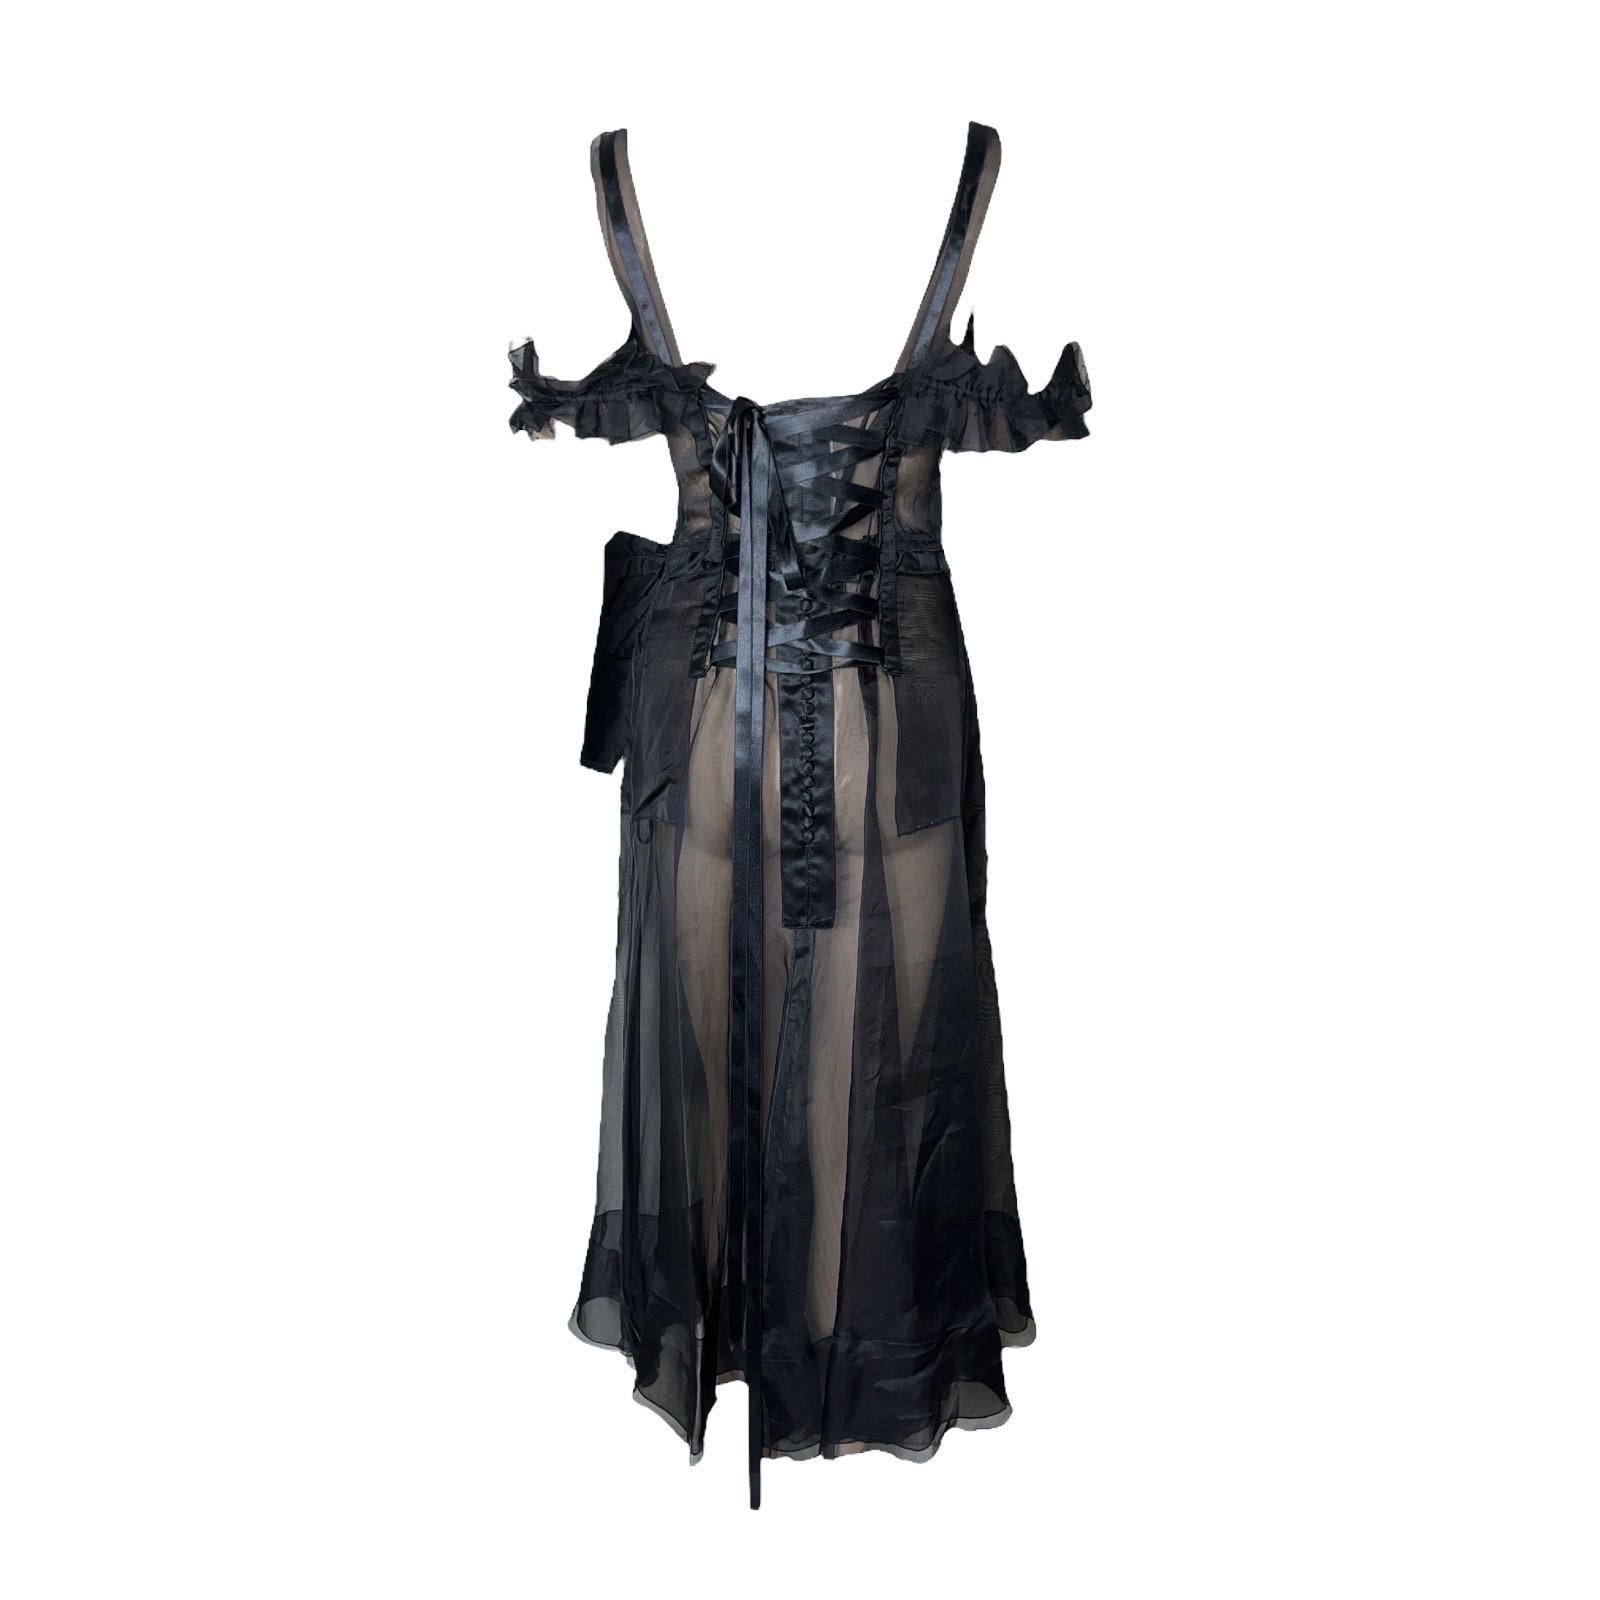 UNWORN Dolce & Gabbana Vintage Black Sheer Lace Up Corset Dress Poppy Flower 40 For Sale 6